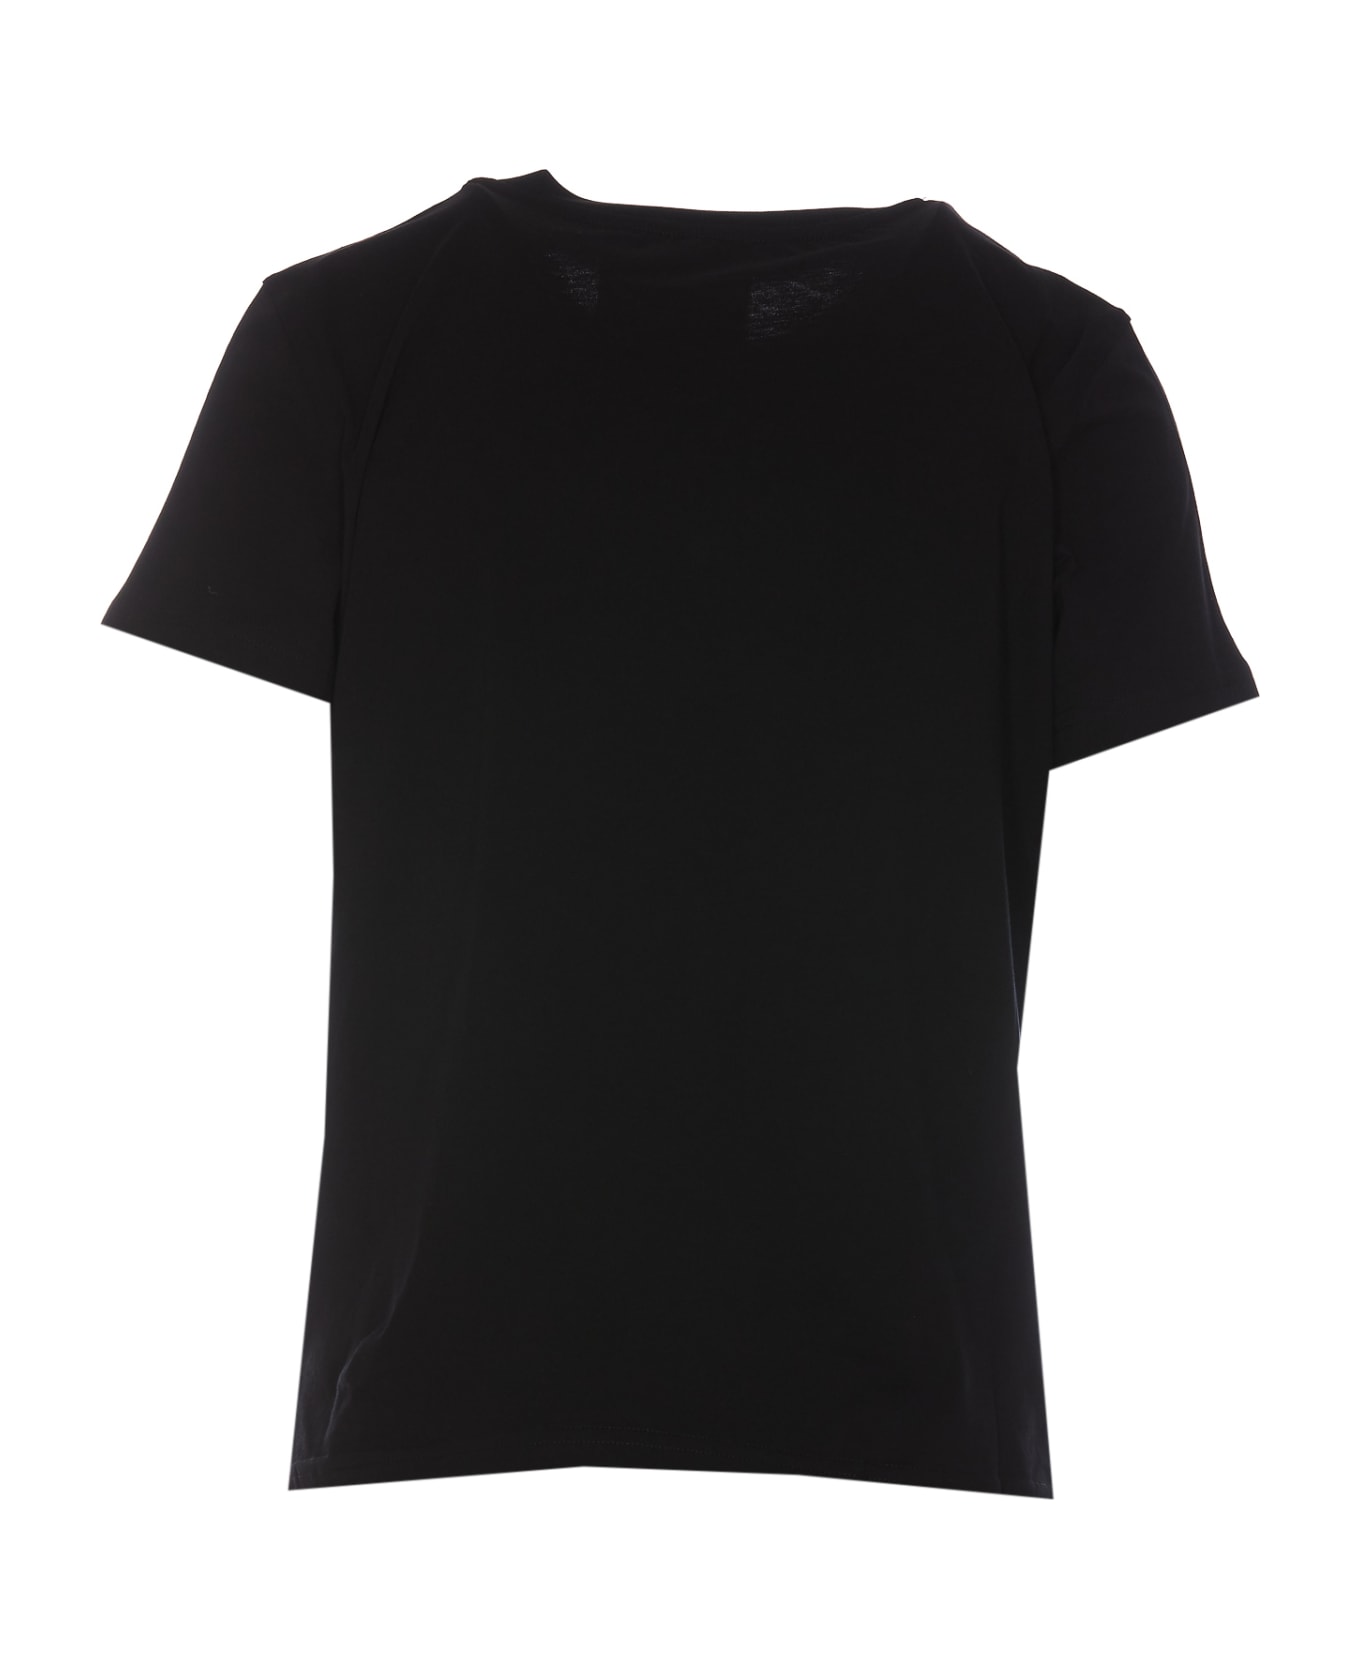 Moschino Teddy Bear T-shirt - Black Tシャツ